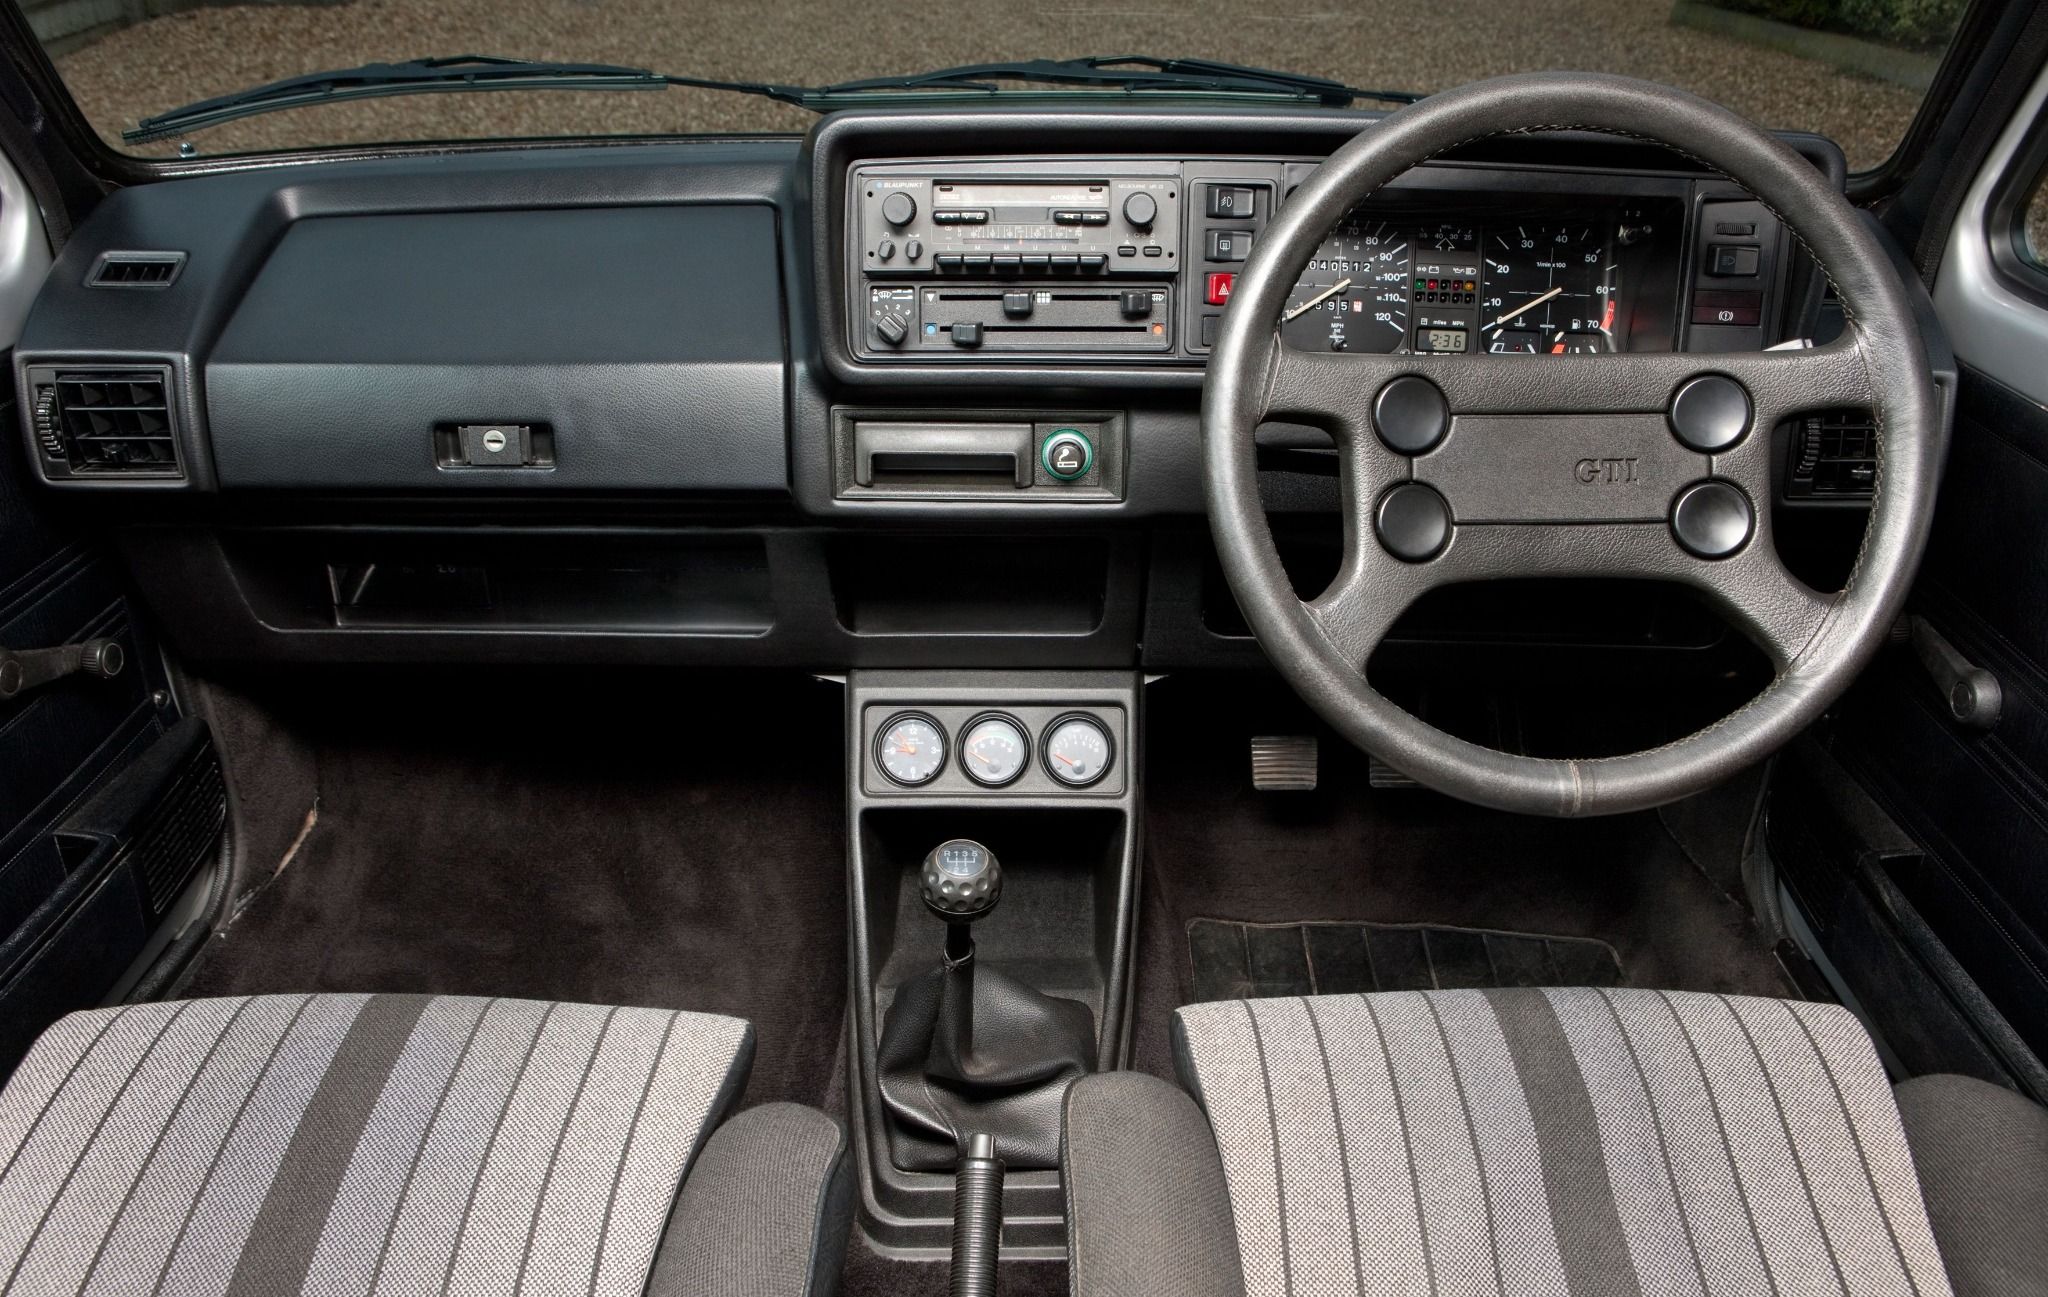 Interior - VW Golf Mark 1